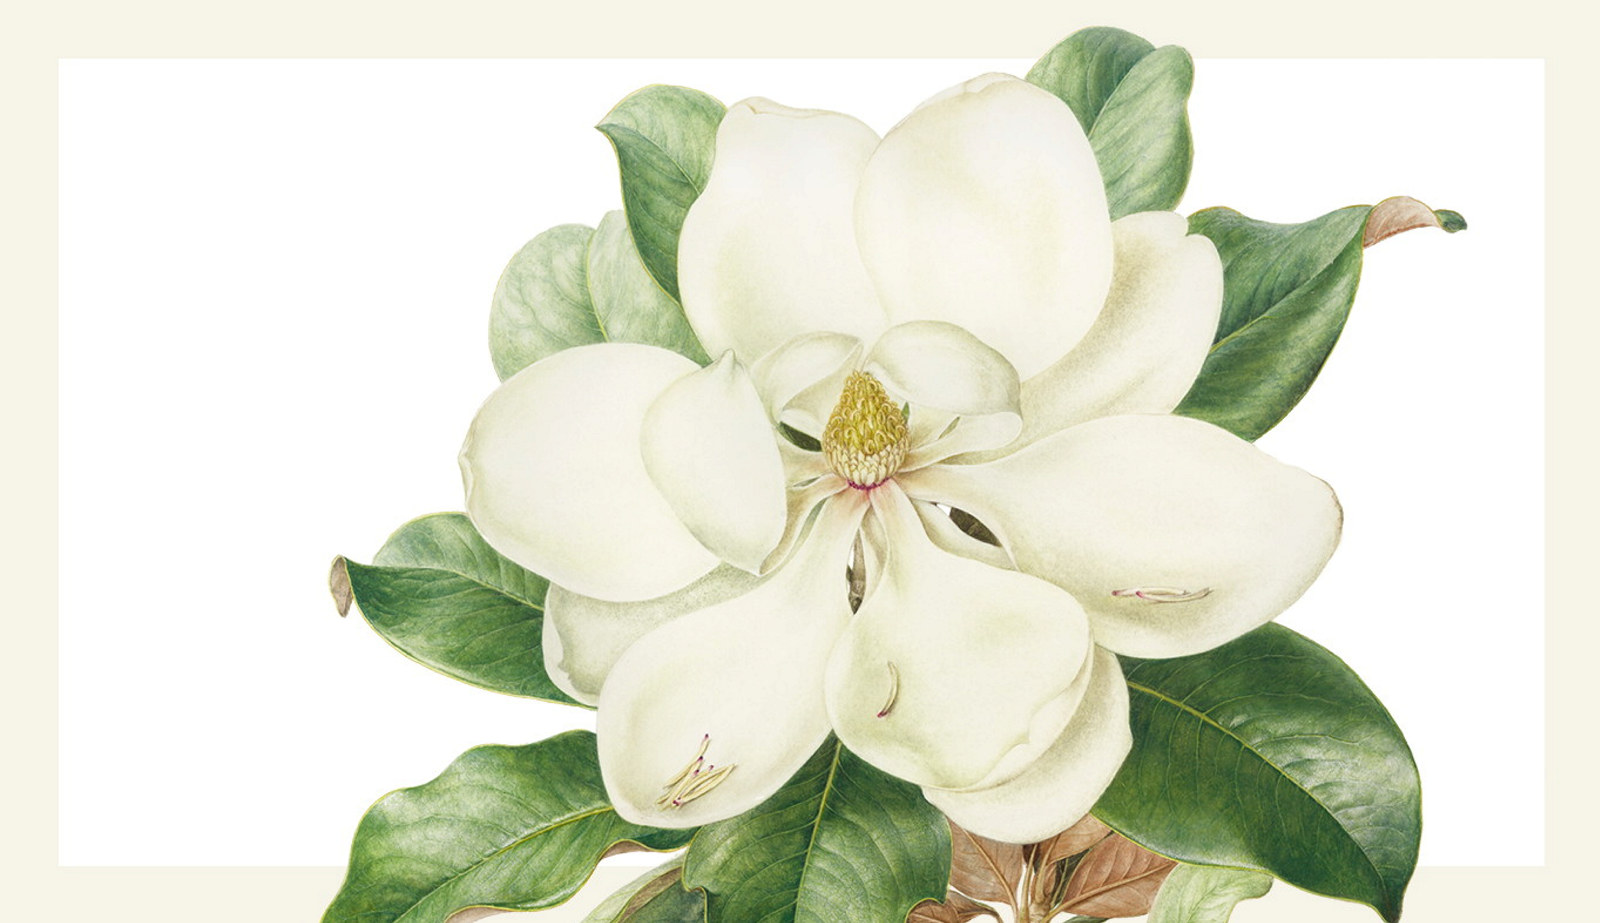 Botanical illustration of Magnolia grandiflora (Bull bay or southern magnolia) by Jenny Phillips, 2015.